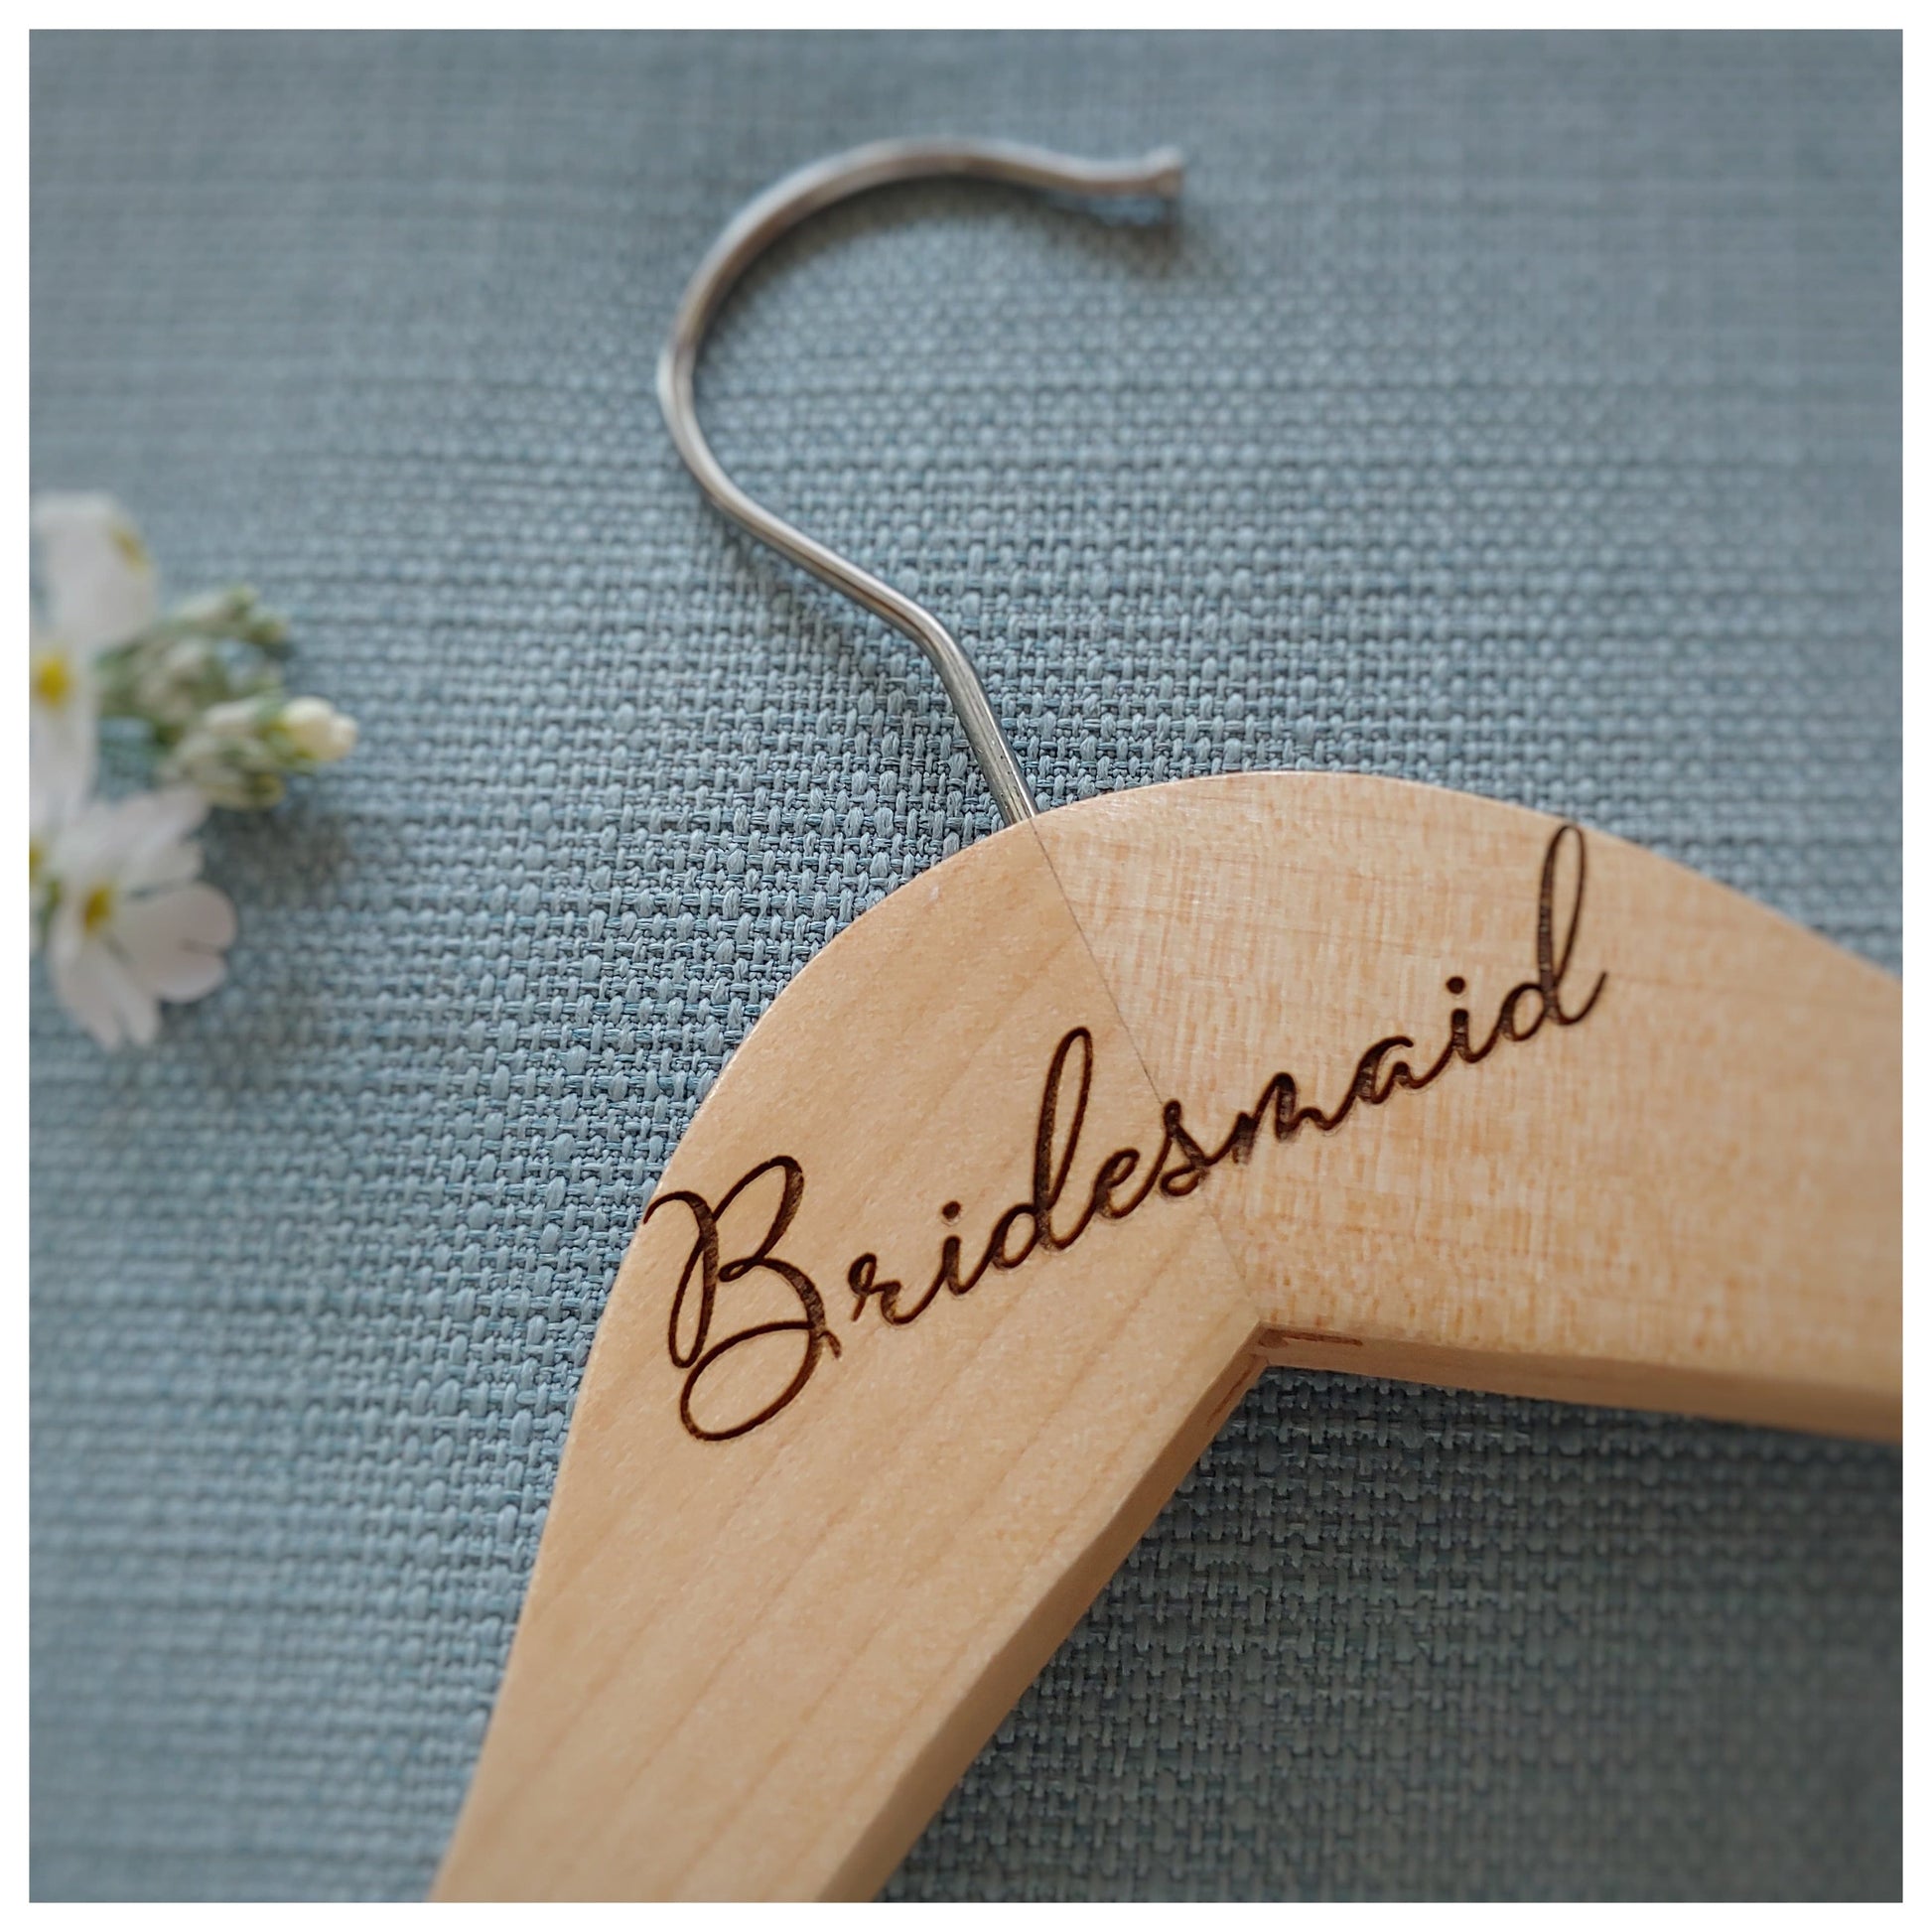 Bridal Party Hangers - Smooches Bridal